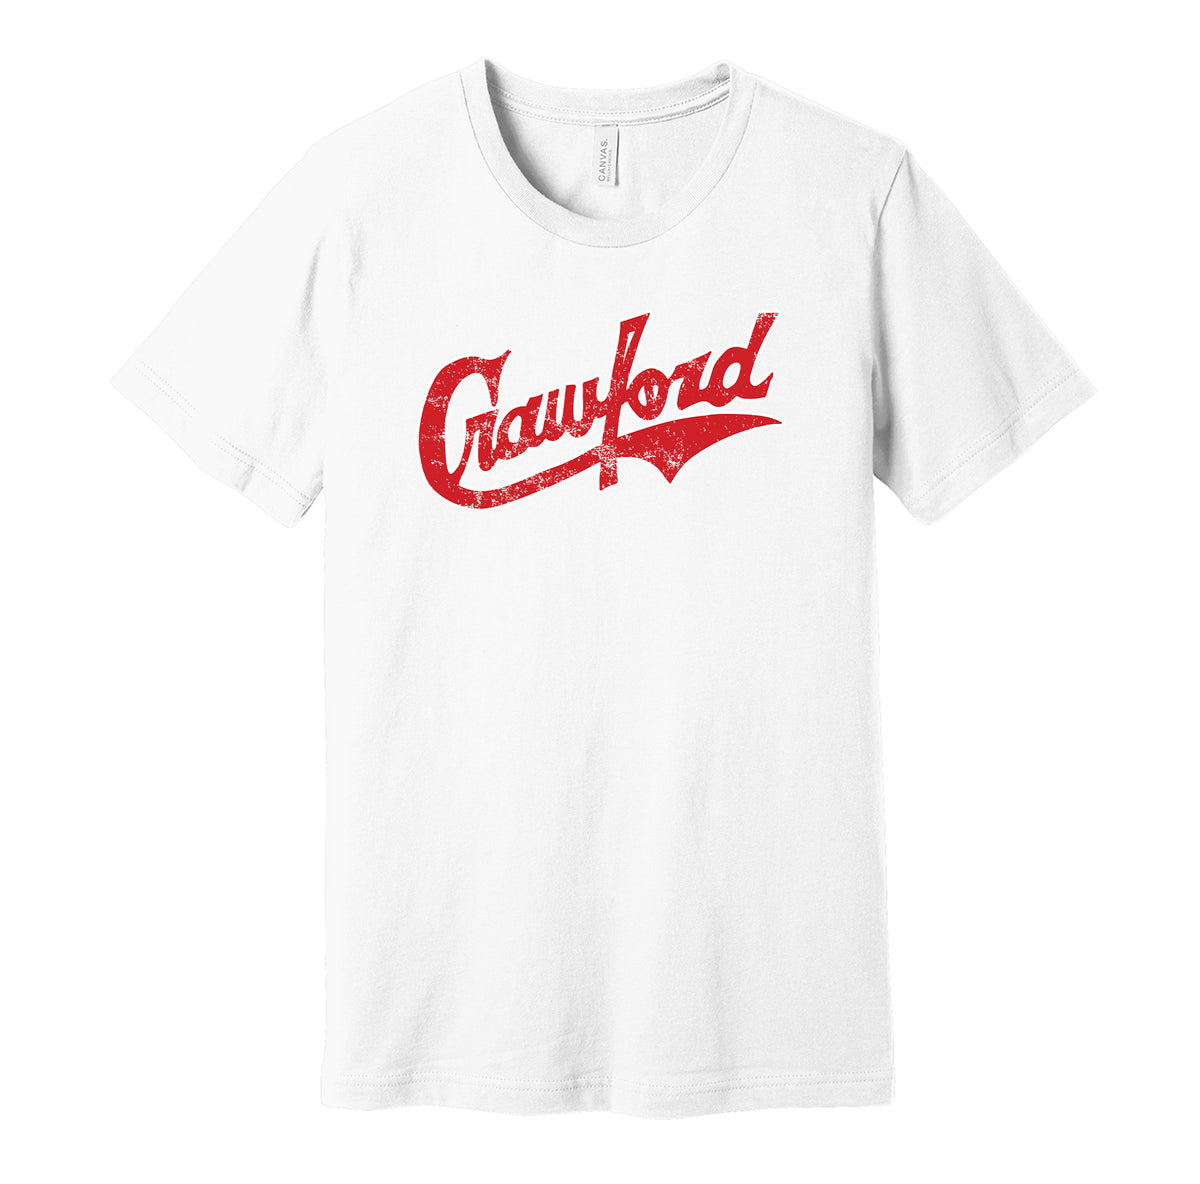 Pittsburgh Crawfords Distressed Logo Shirt - Defunct Team - Hyper